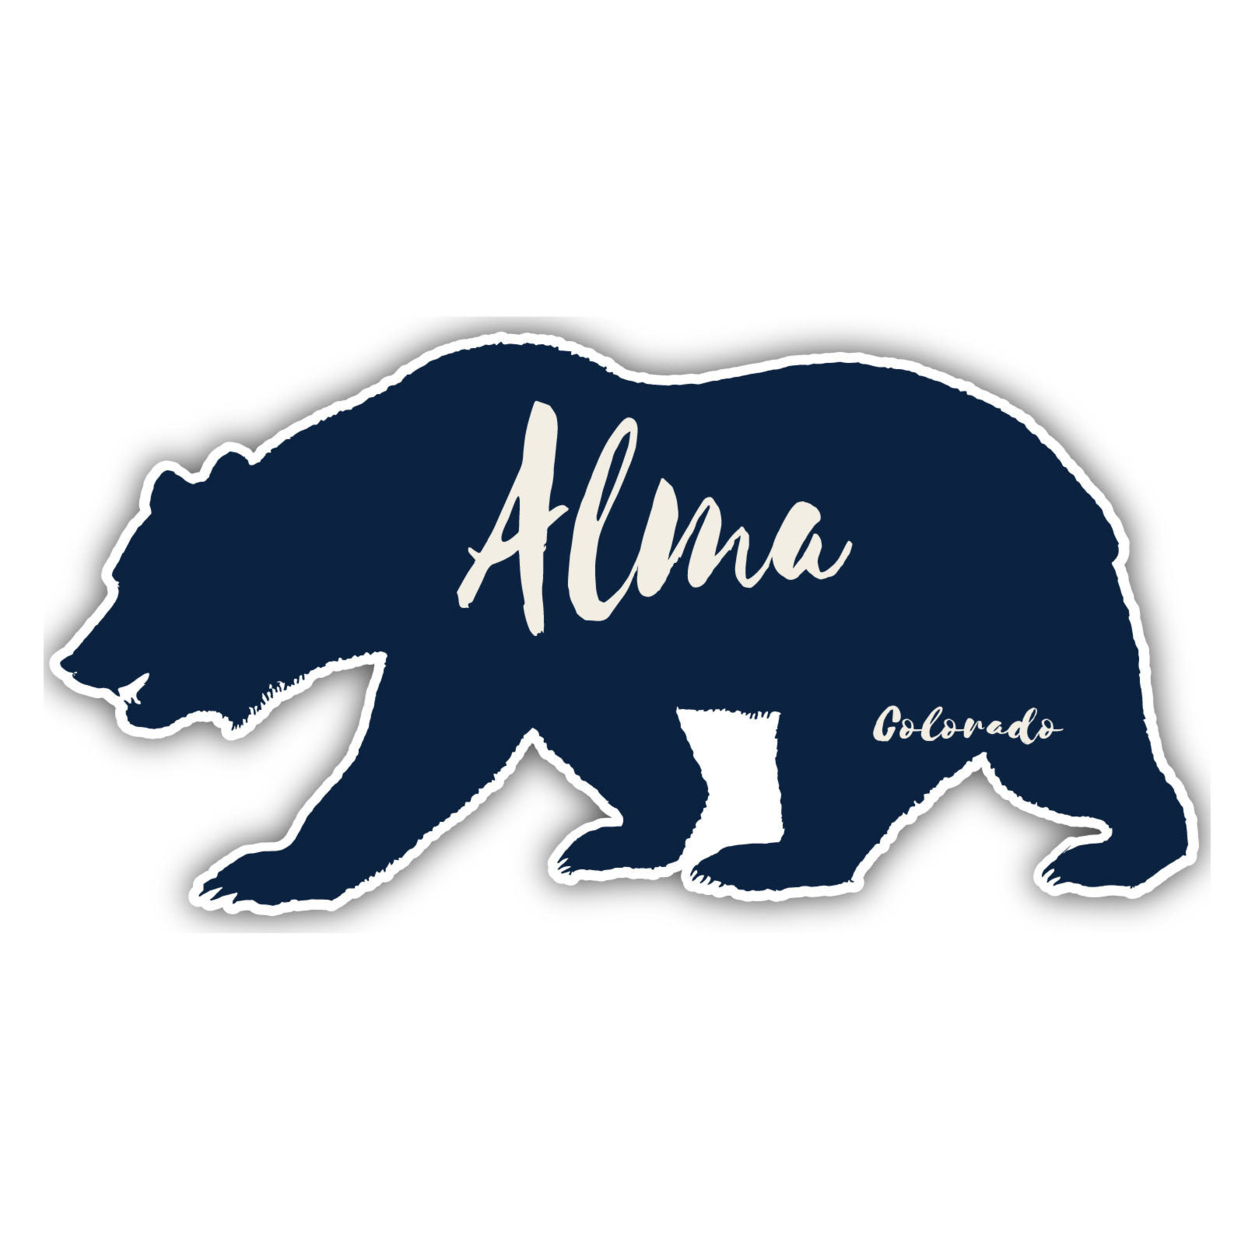 Alma Colorado Souvenir Decorative Stickers (Choose Theme And Size) - Single Unit, 8-Inch, Tent